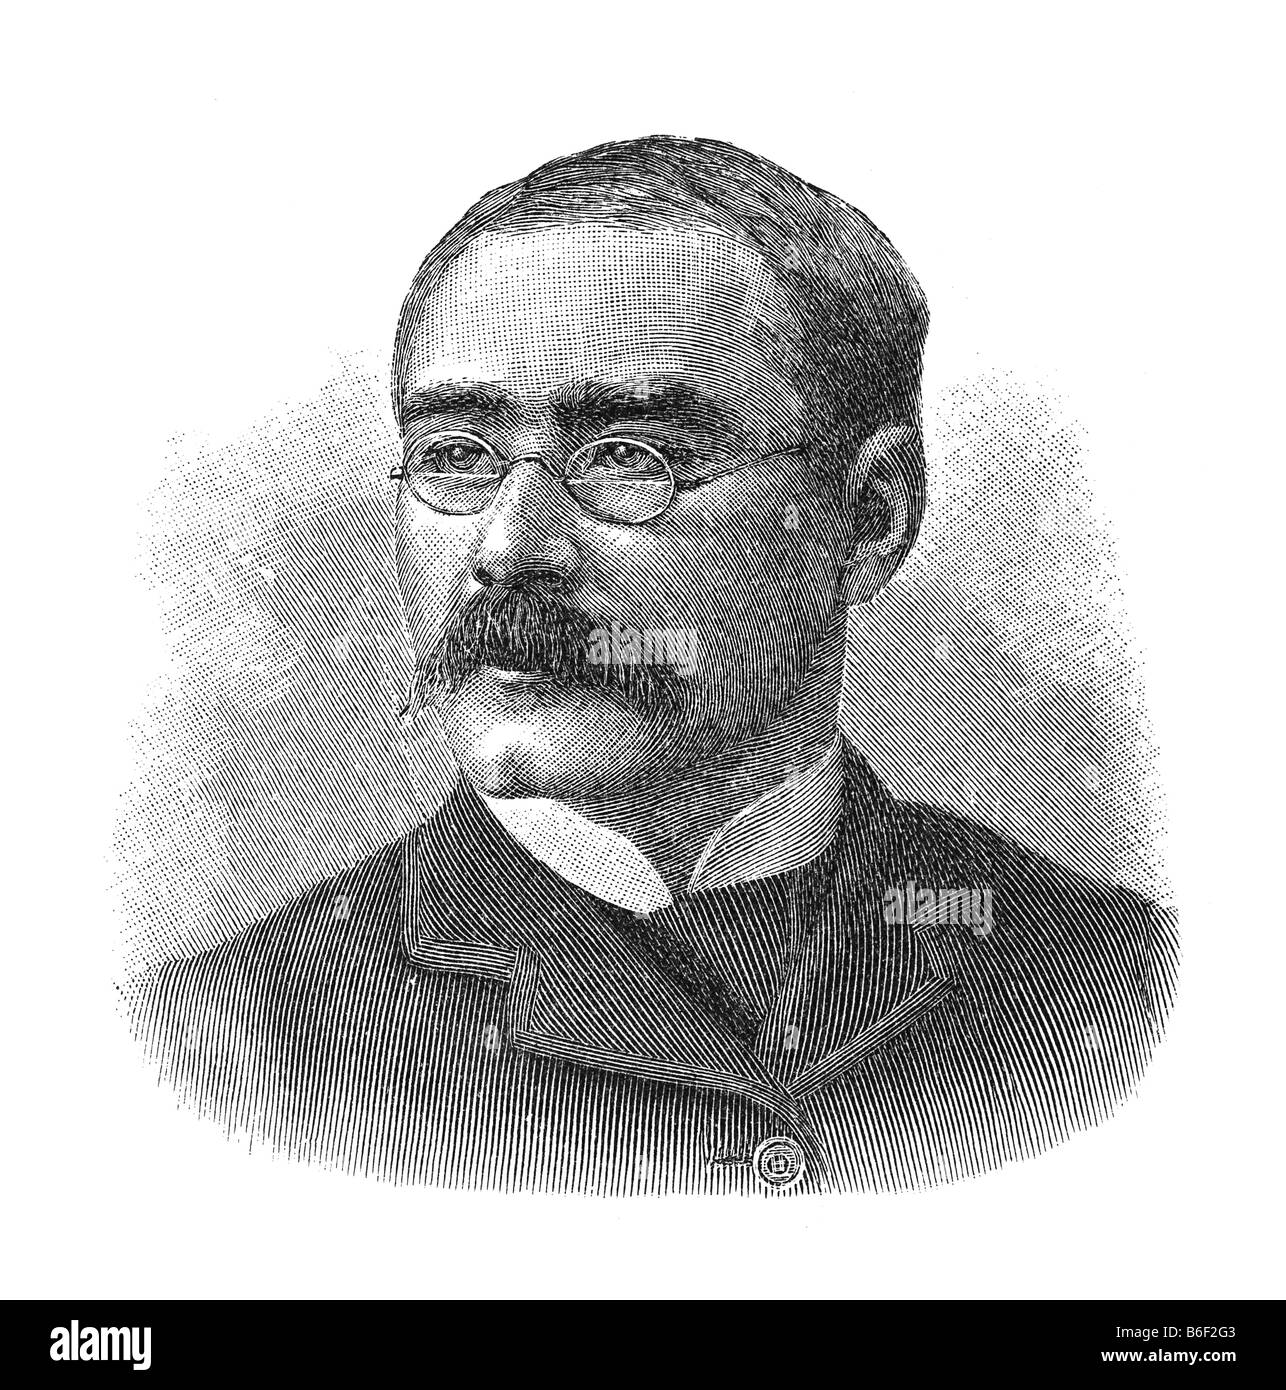 Joseph Rudyard Kipling, 30. Dezember 1865 Bombay - 18. Januar 1936 London  Stock Photo - Alamy